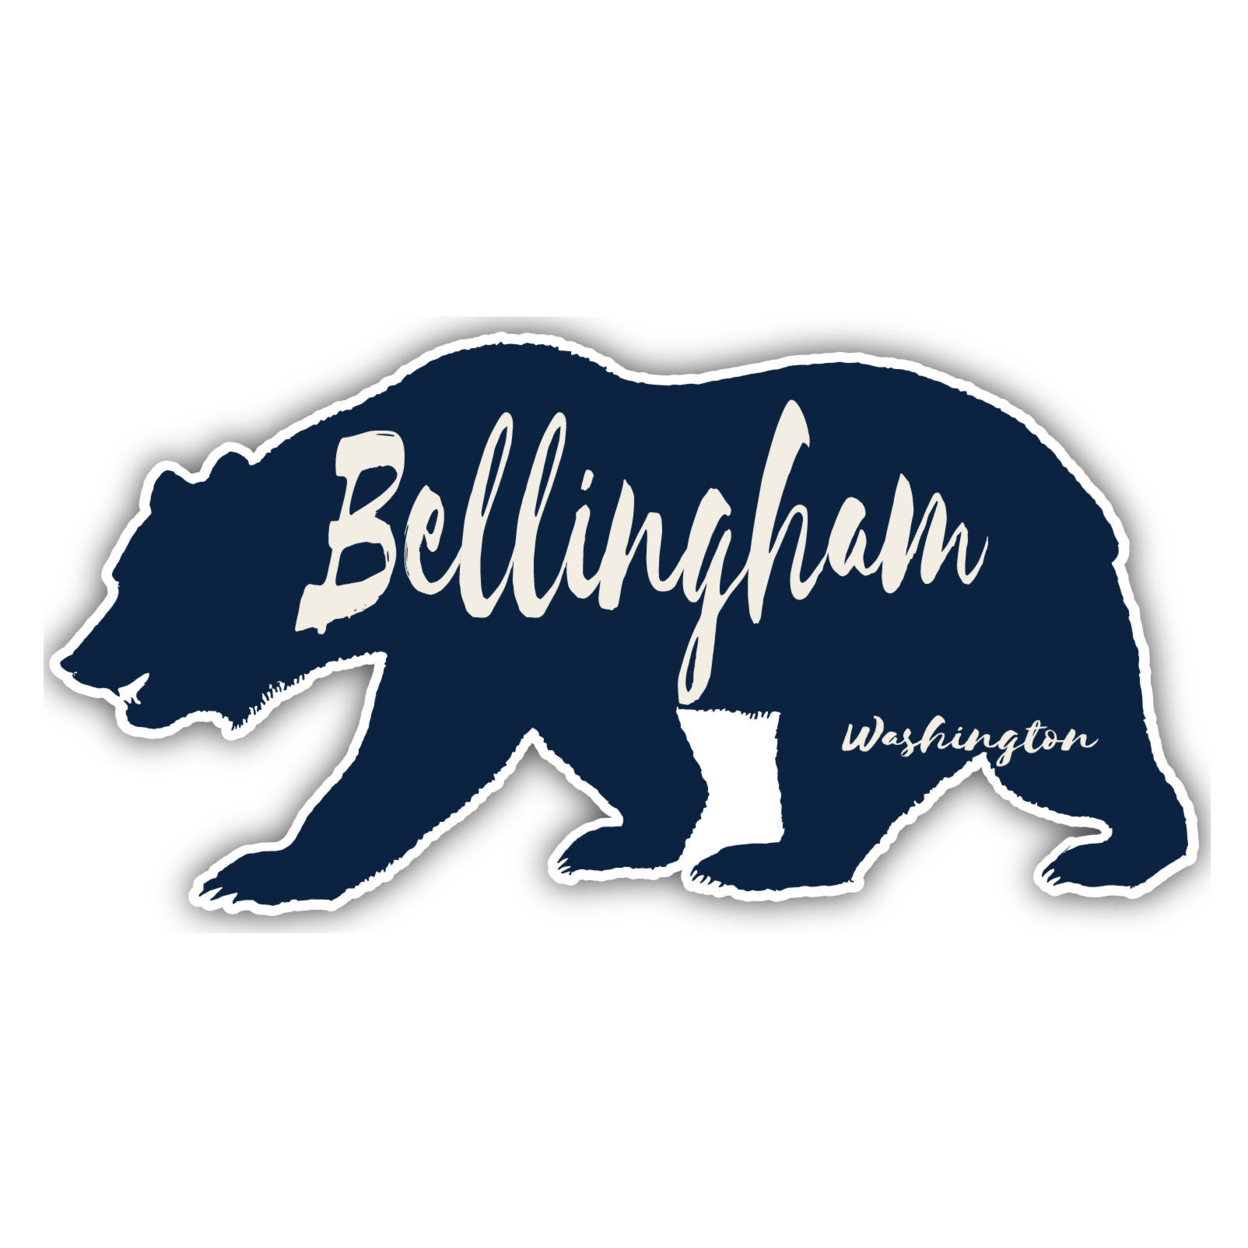 Bellingham Washington Souvenir Decorative Stickers (Choose Theme And Size) - 4-Pack, 8-Inch, Bear